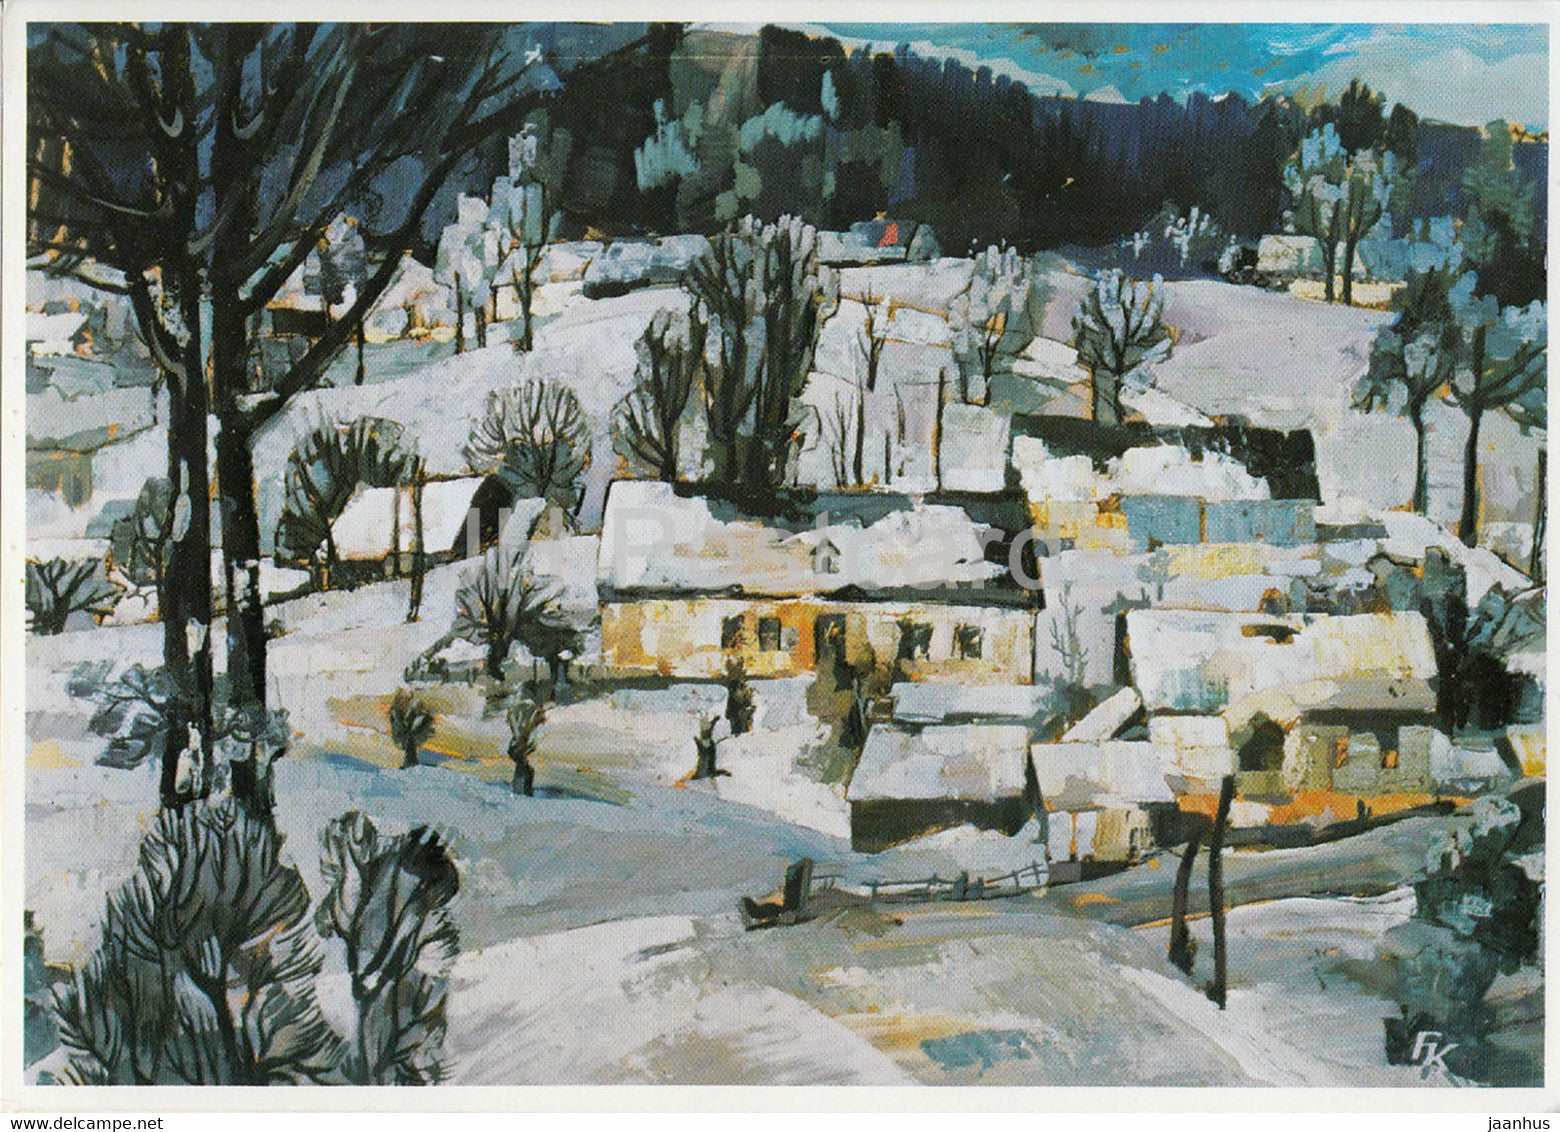 painting by Franz Kaulfersch - Luxdorf im Winter - German art - Germany - unused - JH Postcards